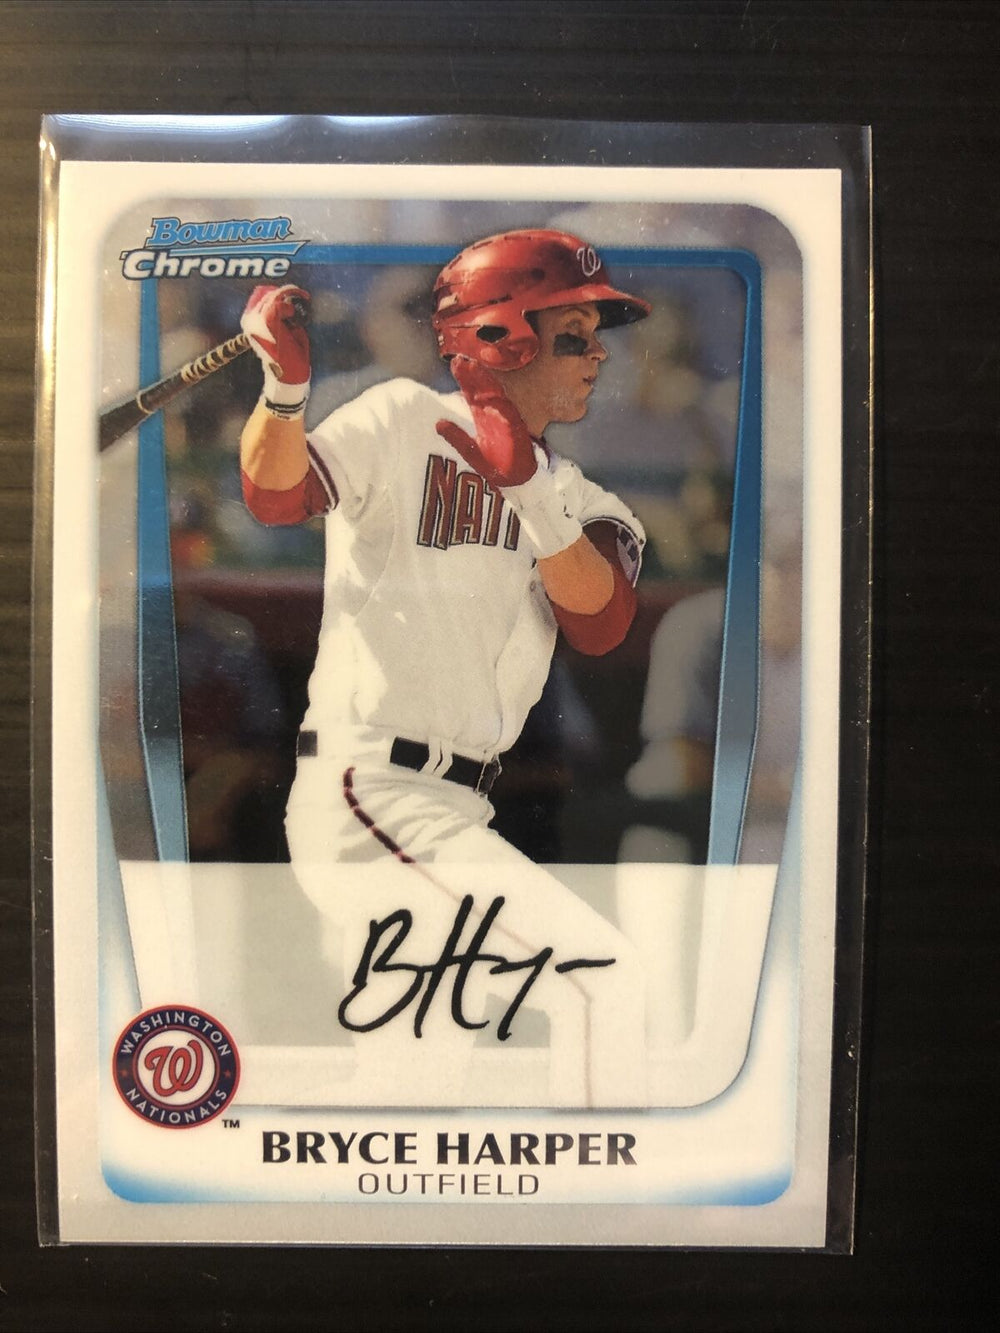 Bryce Harper 2011 Bowman Chrome Prospects Series Mint ROOKIE Card #BP1